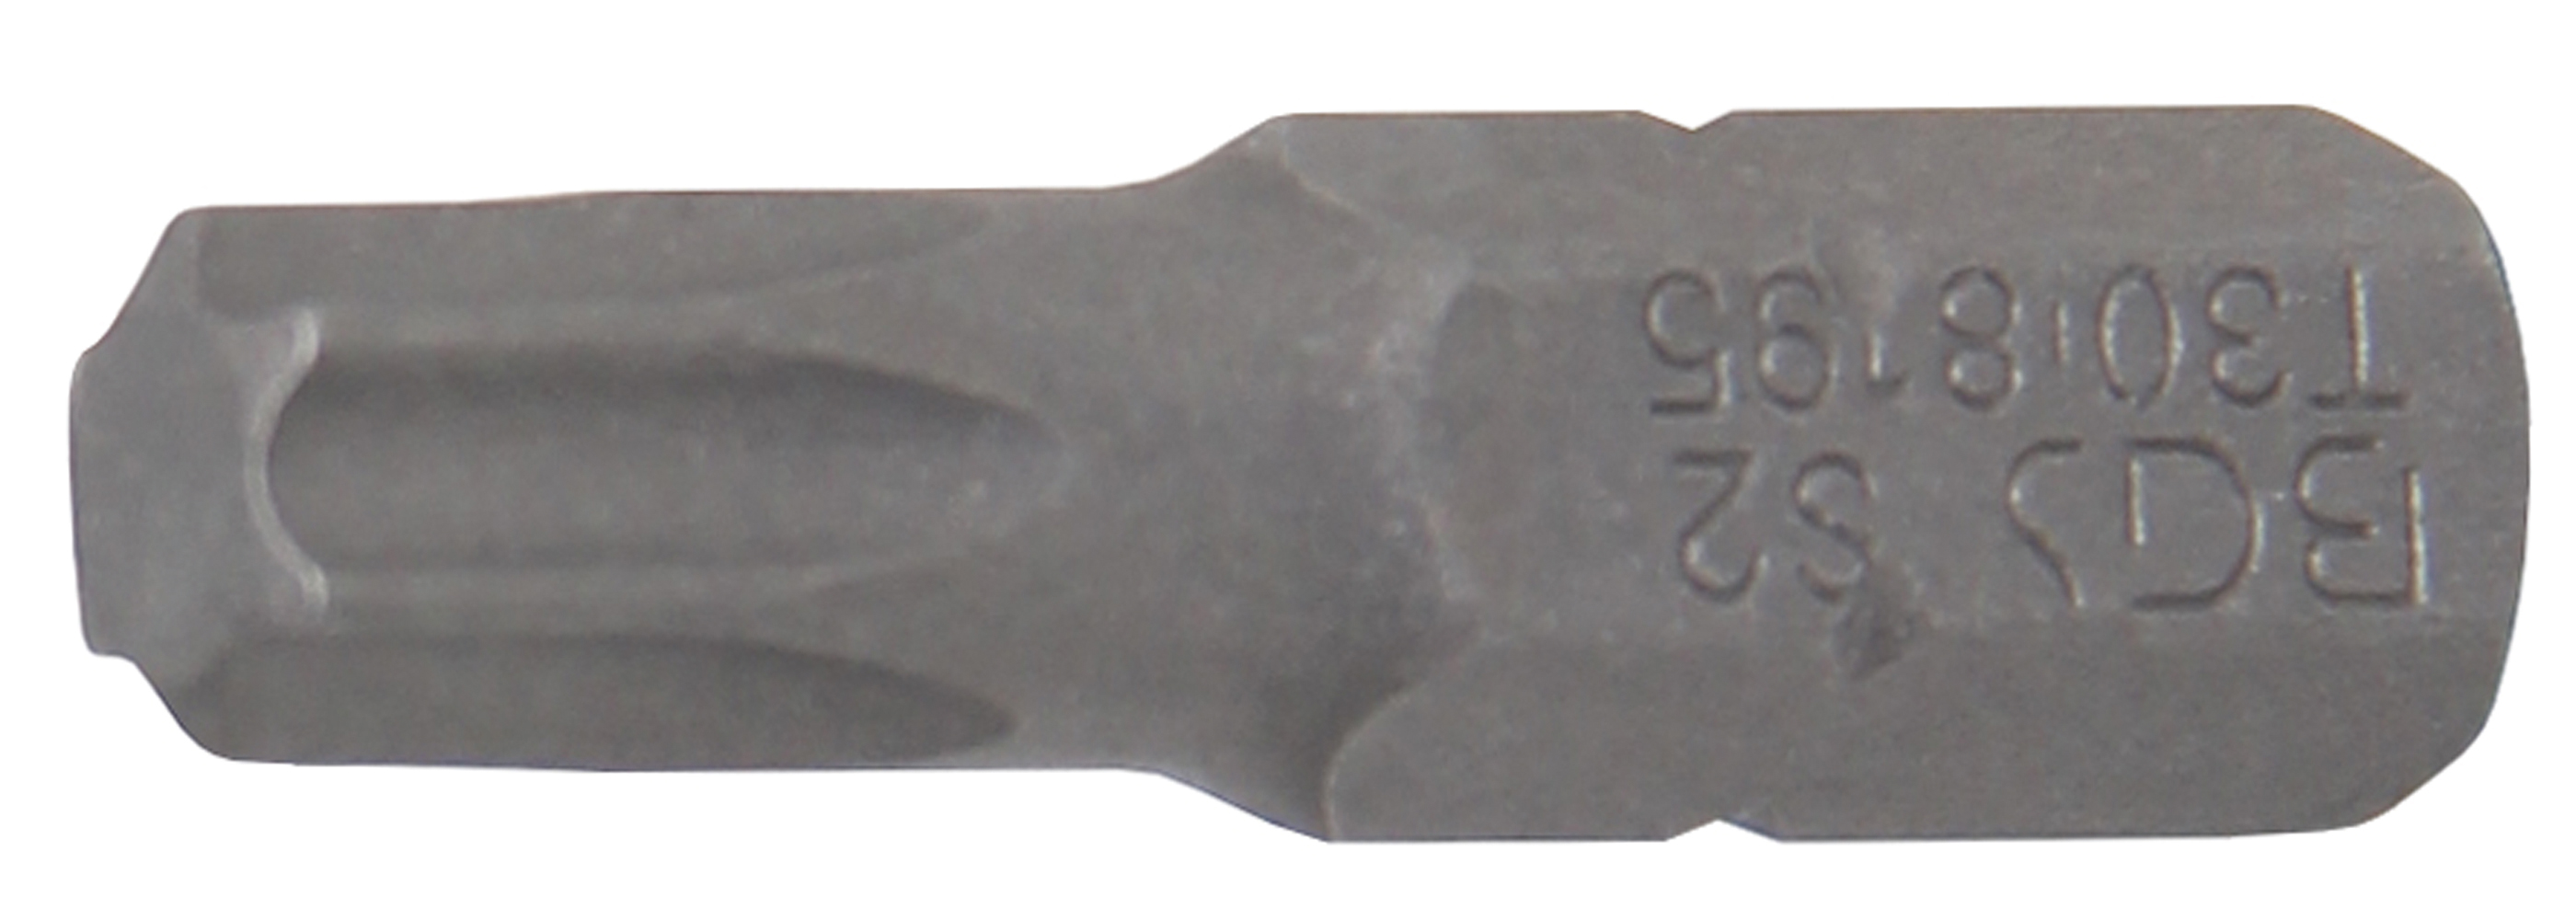 BGS Bit | Länge 25 mm | Antrieb Außensechskant 6,3 mm (1/4") | T-Profil (für Torx) T30